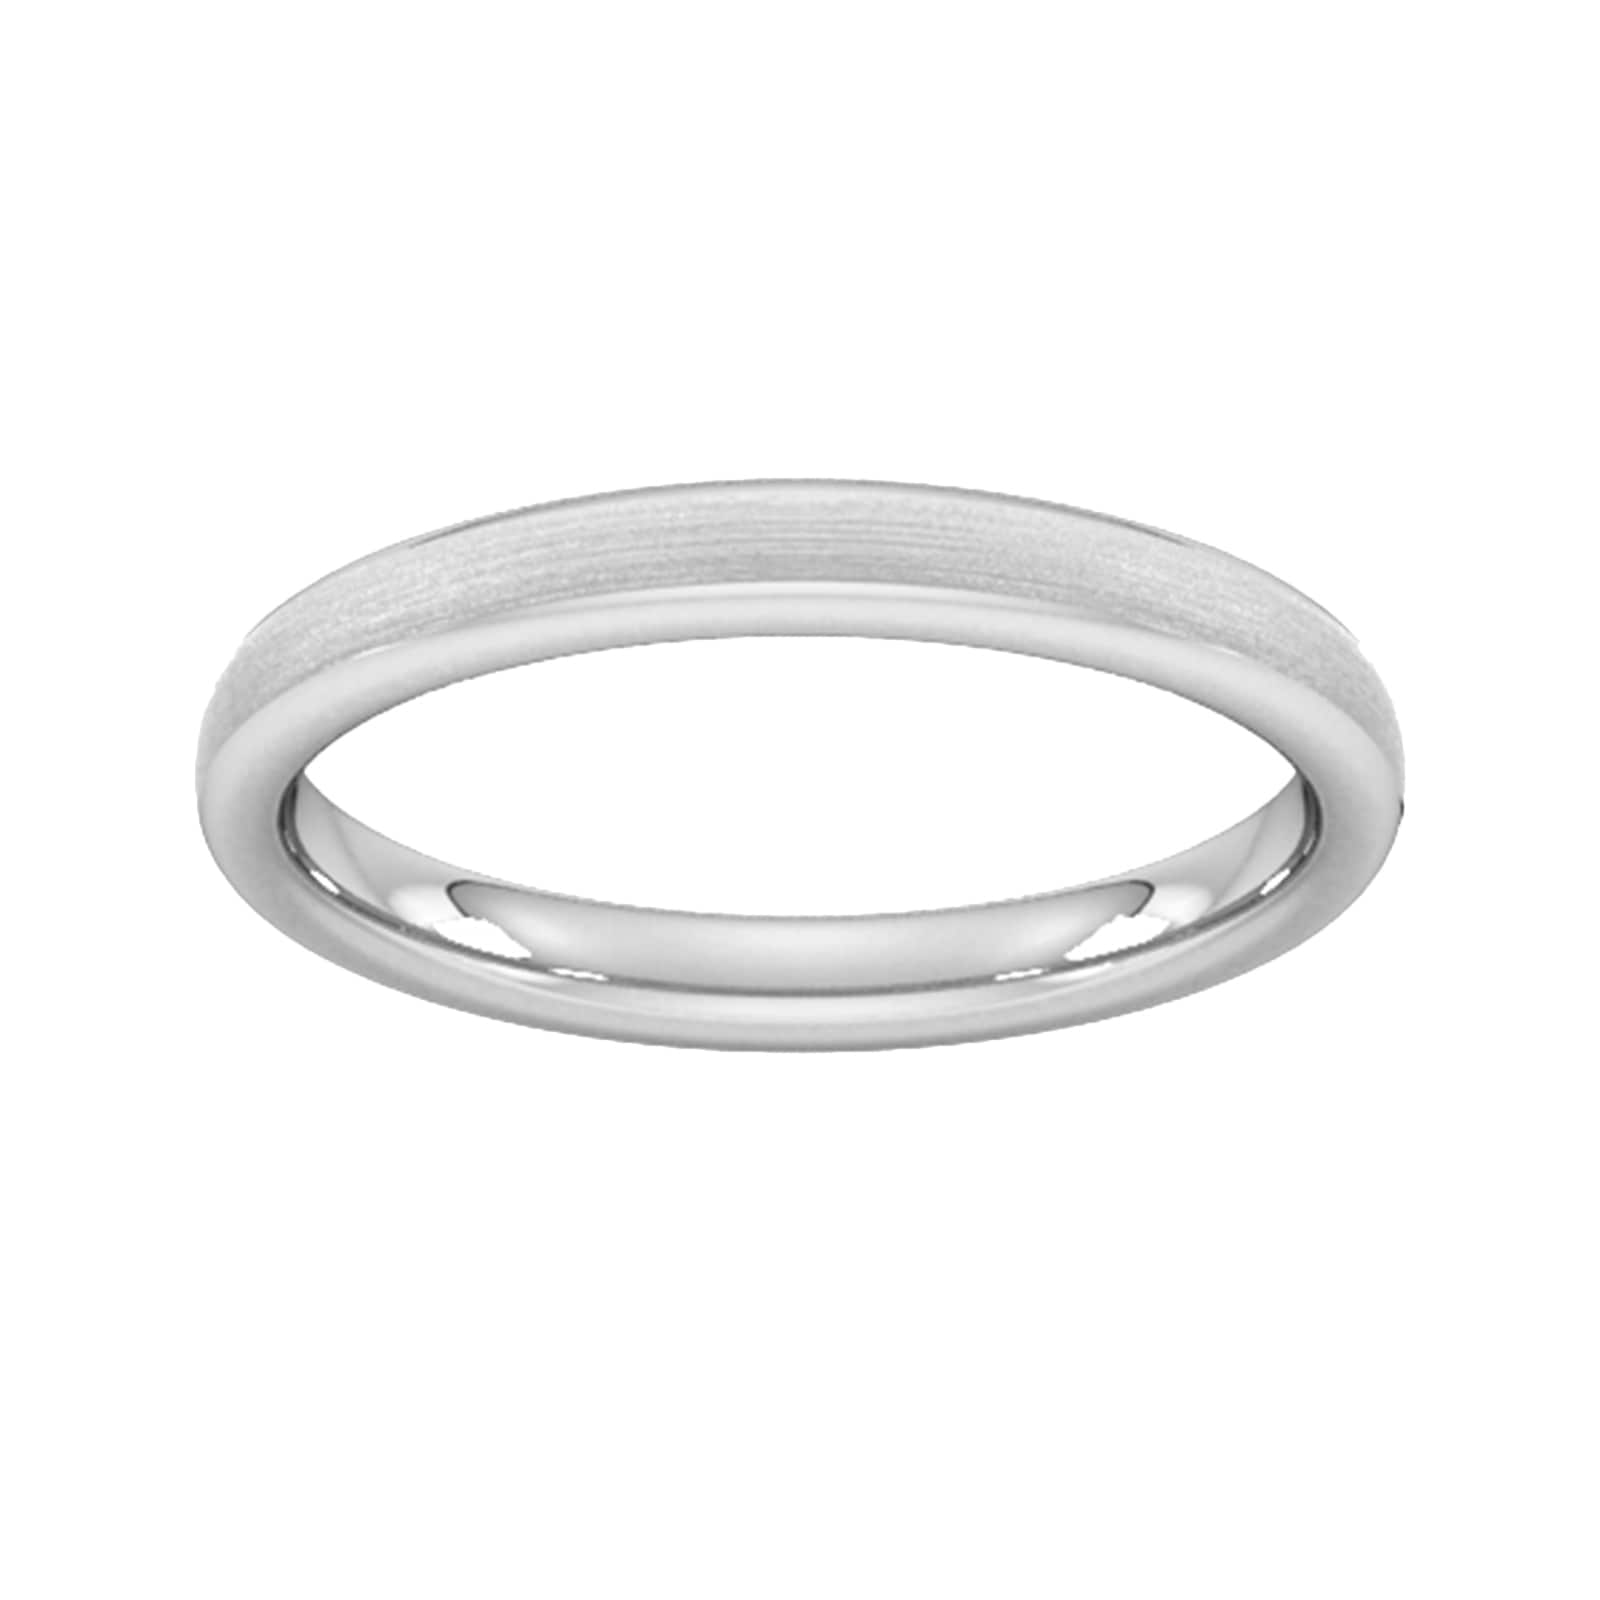 2.5mm Slight Court Standard Matt Finished Wedding Ring In 9 Carat White Gold - Ring Size P